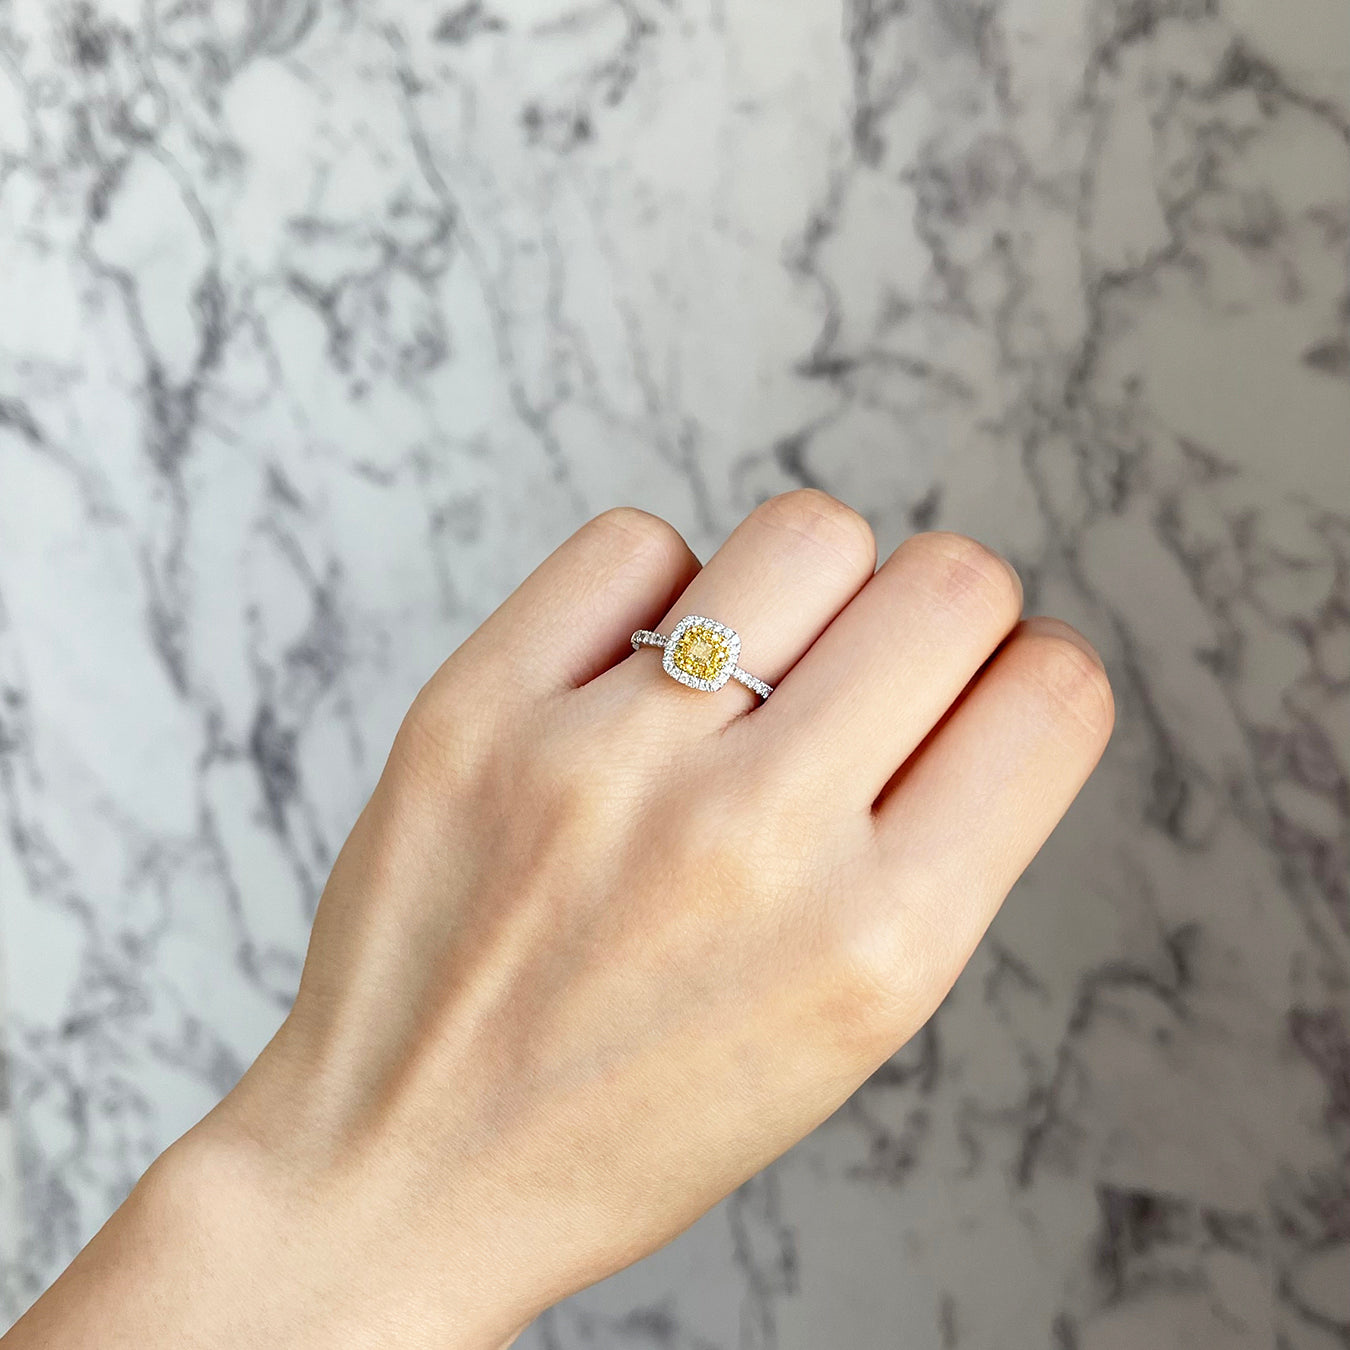 18k白金黃鑽戒指在無名指上 18k White Gold Yellow Diamond Ring on ring finger